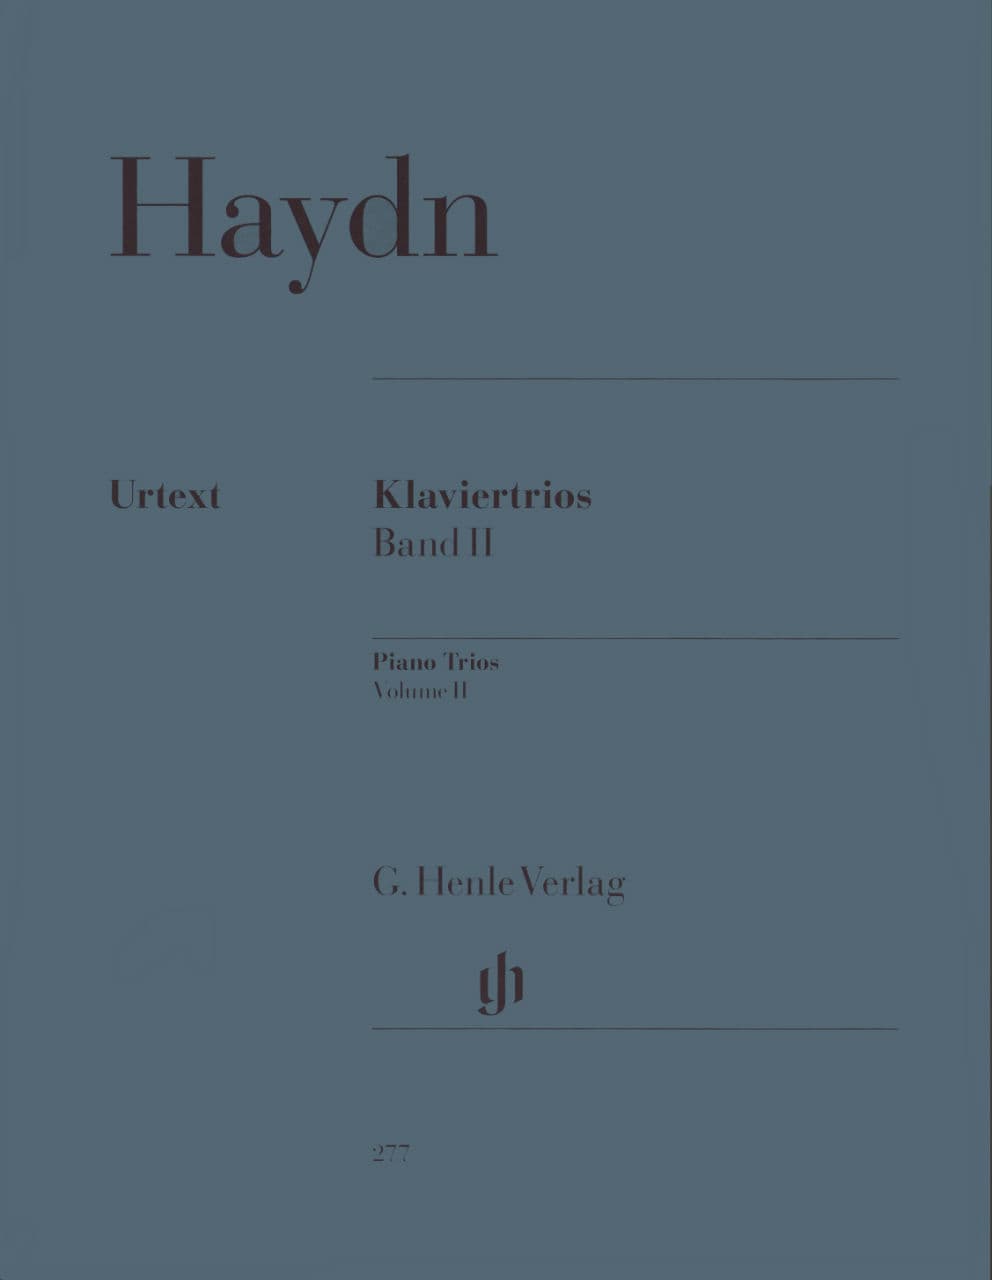 Haydn, Franz Joseph - Piano Trios, Volume 2 - Violin, Cello, and Piano - edited by Wolfgang Stockmeier - G Henle Verlag URTEXT